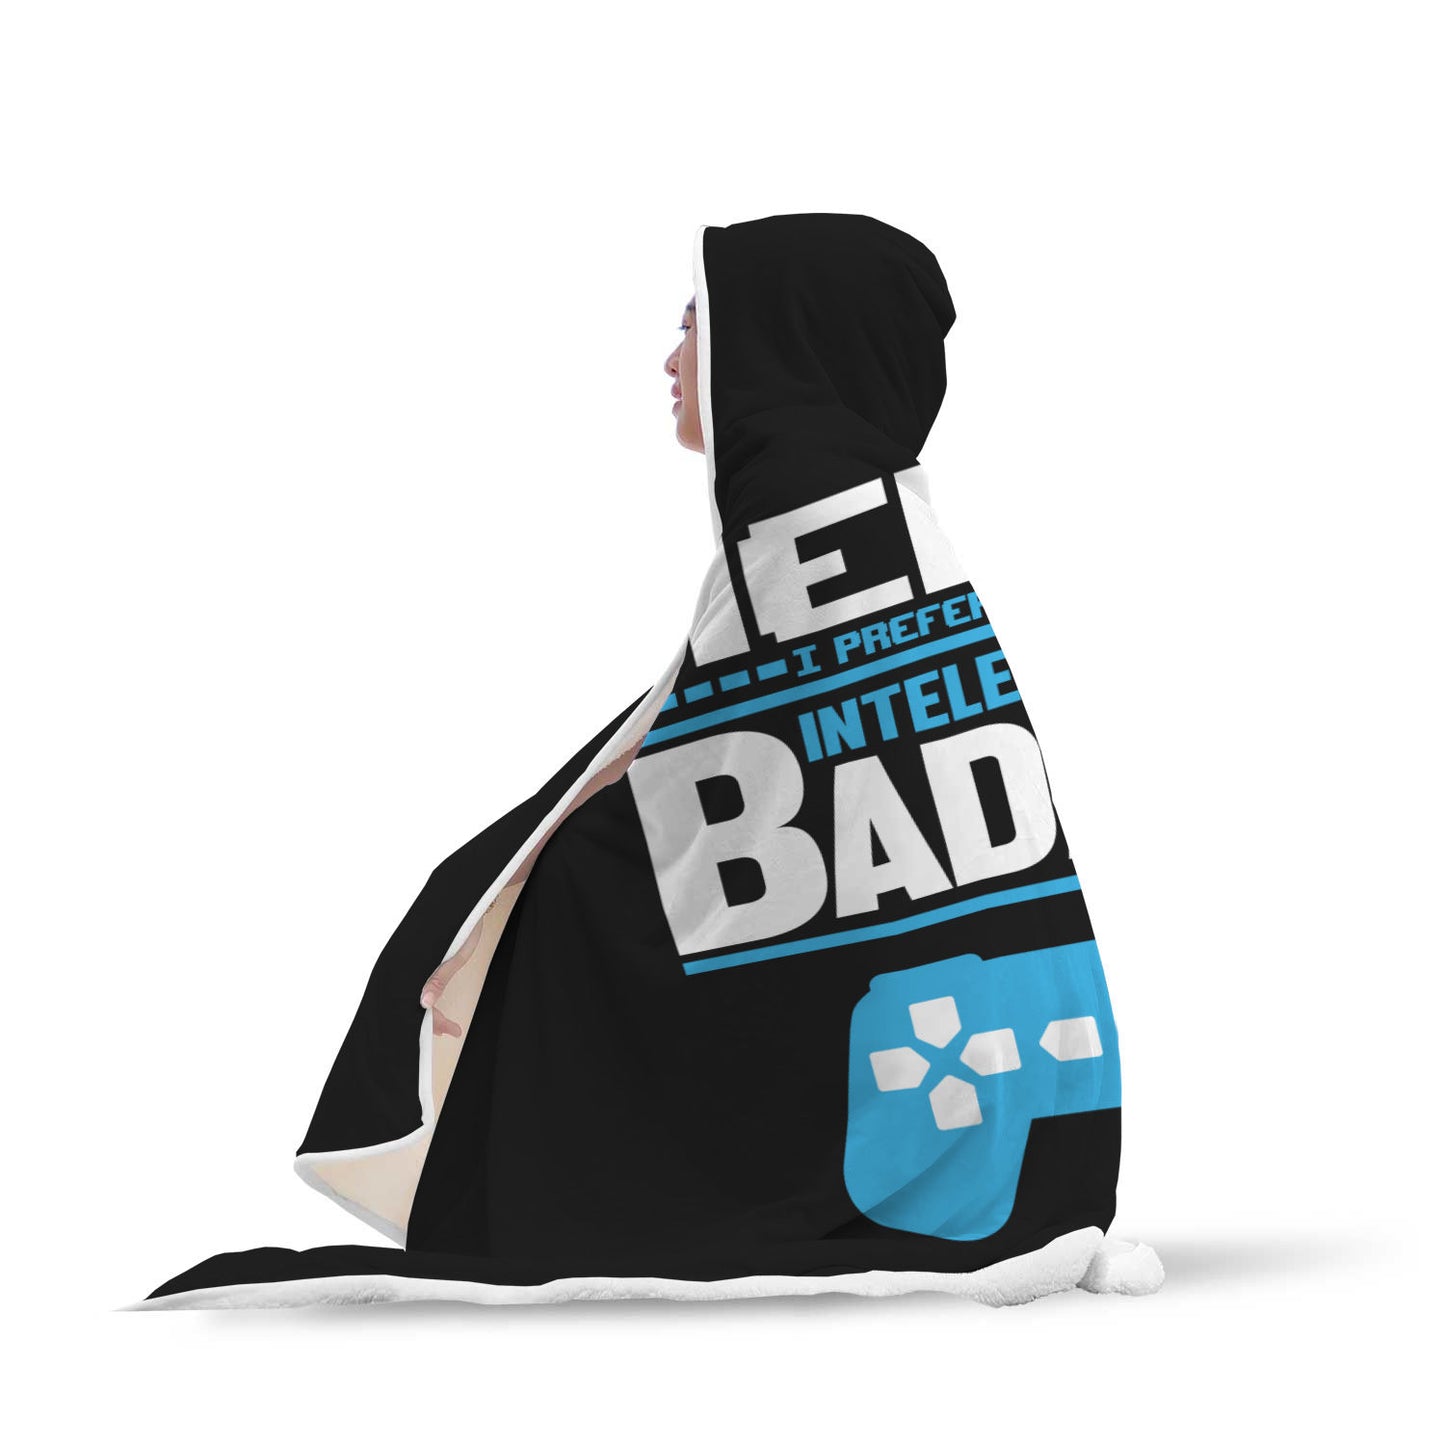 Nerd? I Prefer The Term Intellectual Badass Video Gamer Hooded Blanket